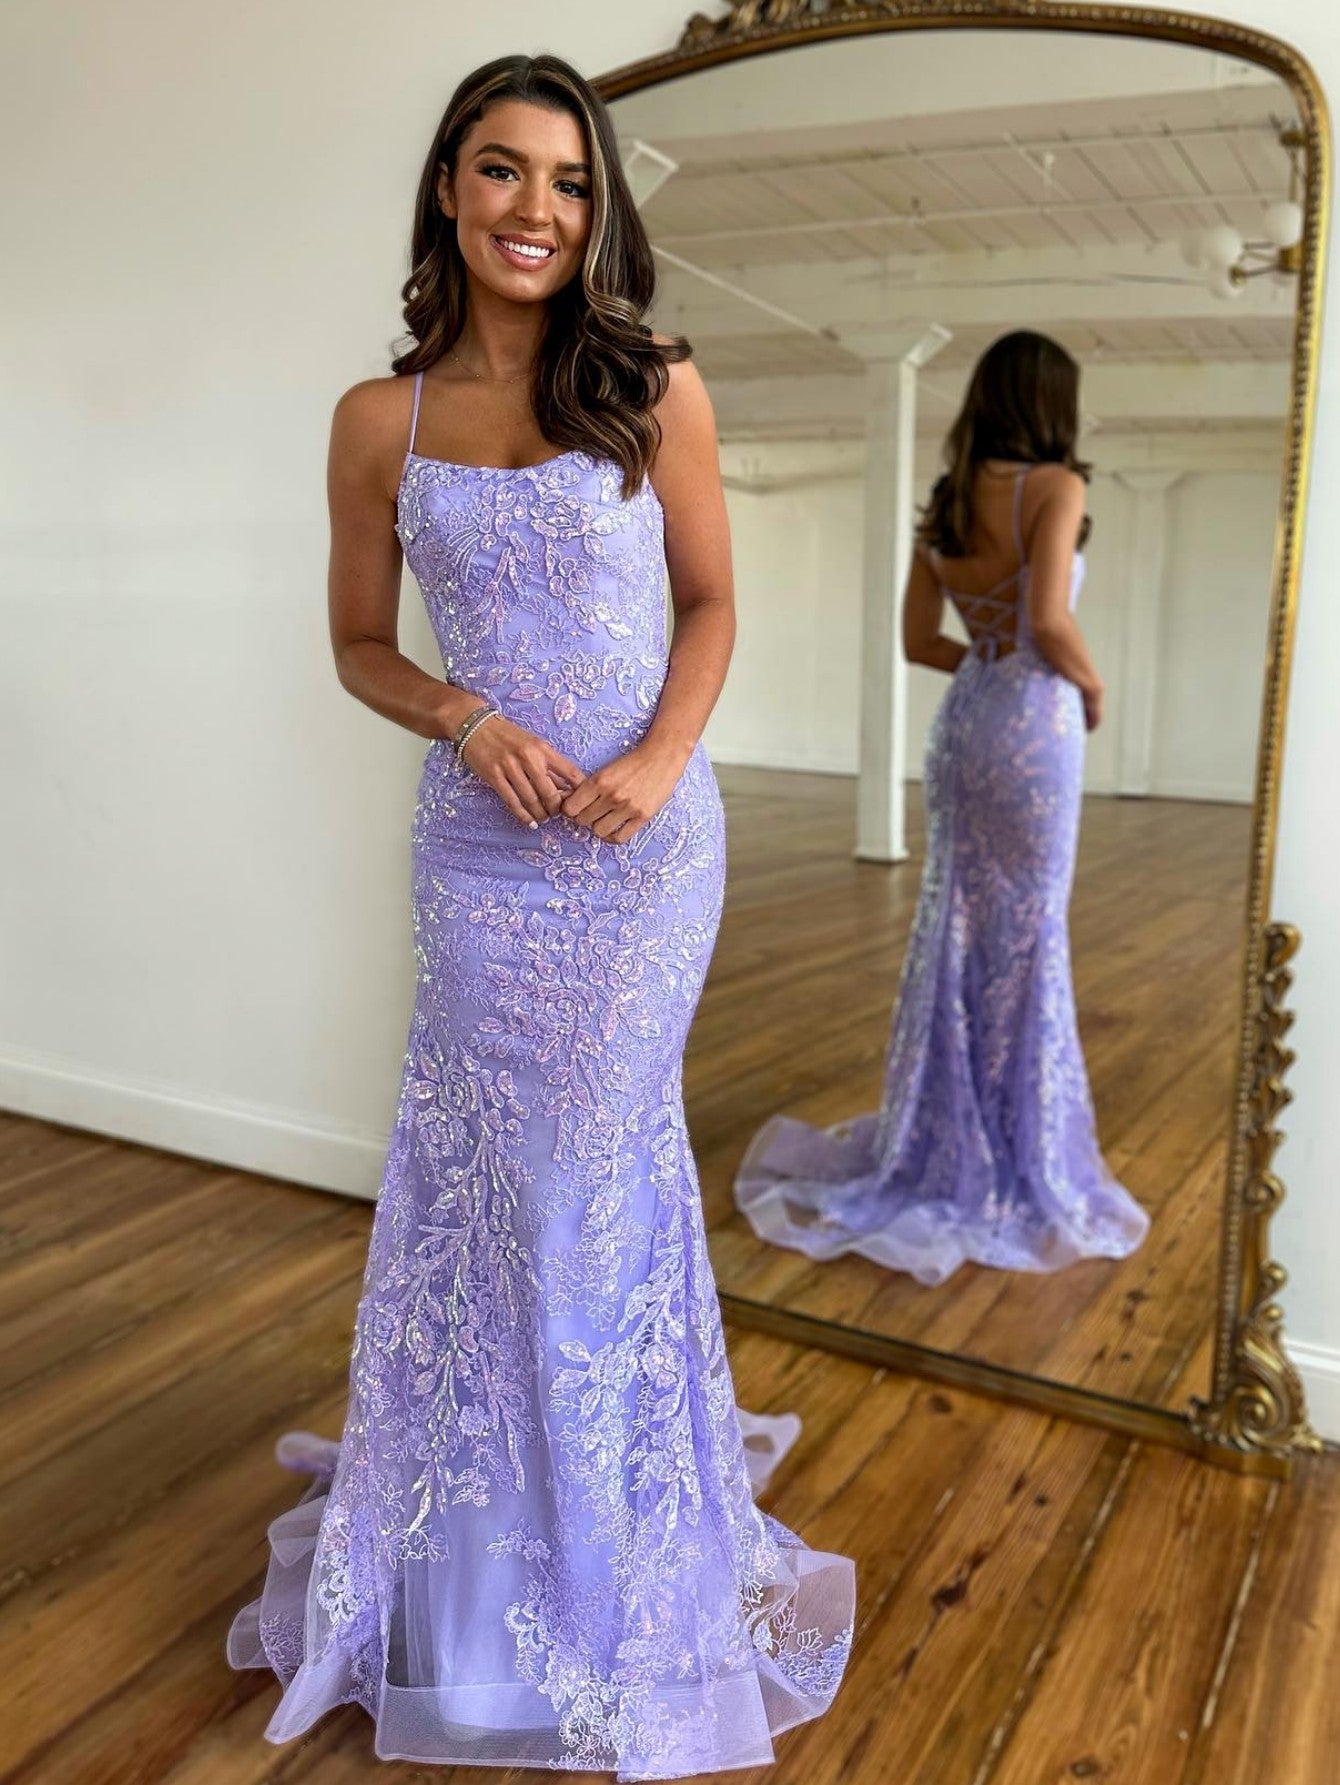 Aaliyah Hot Pink Spaghetti Straps Satin Mermaid Prom Dress with